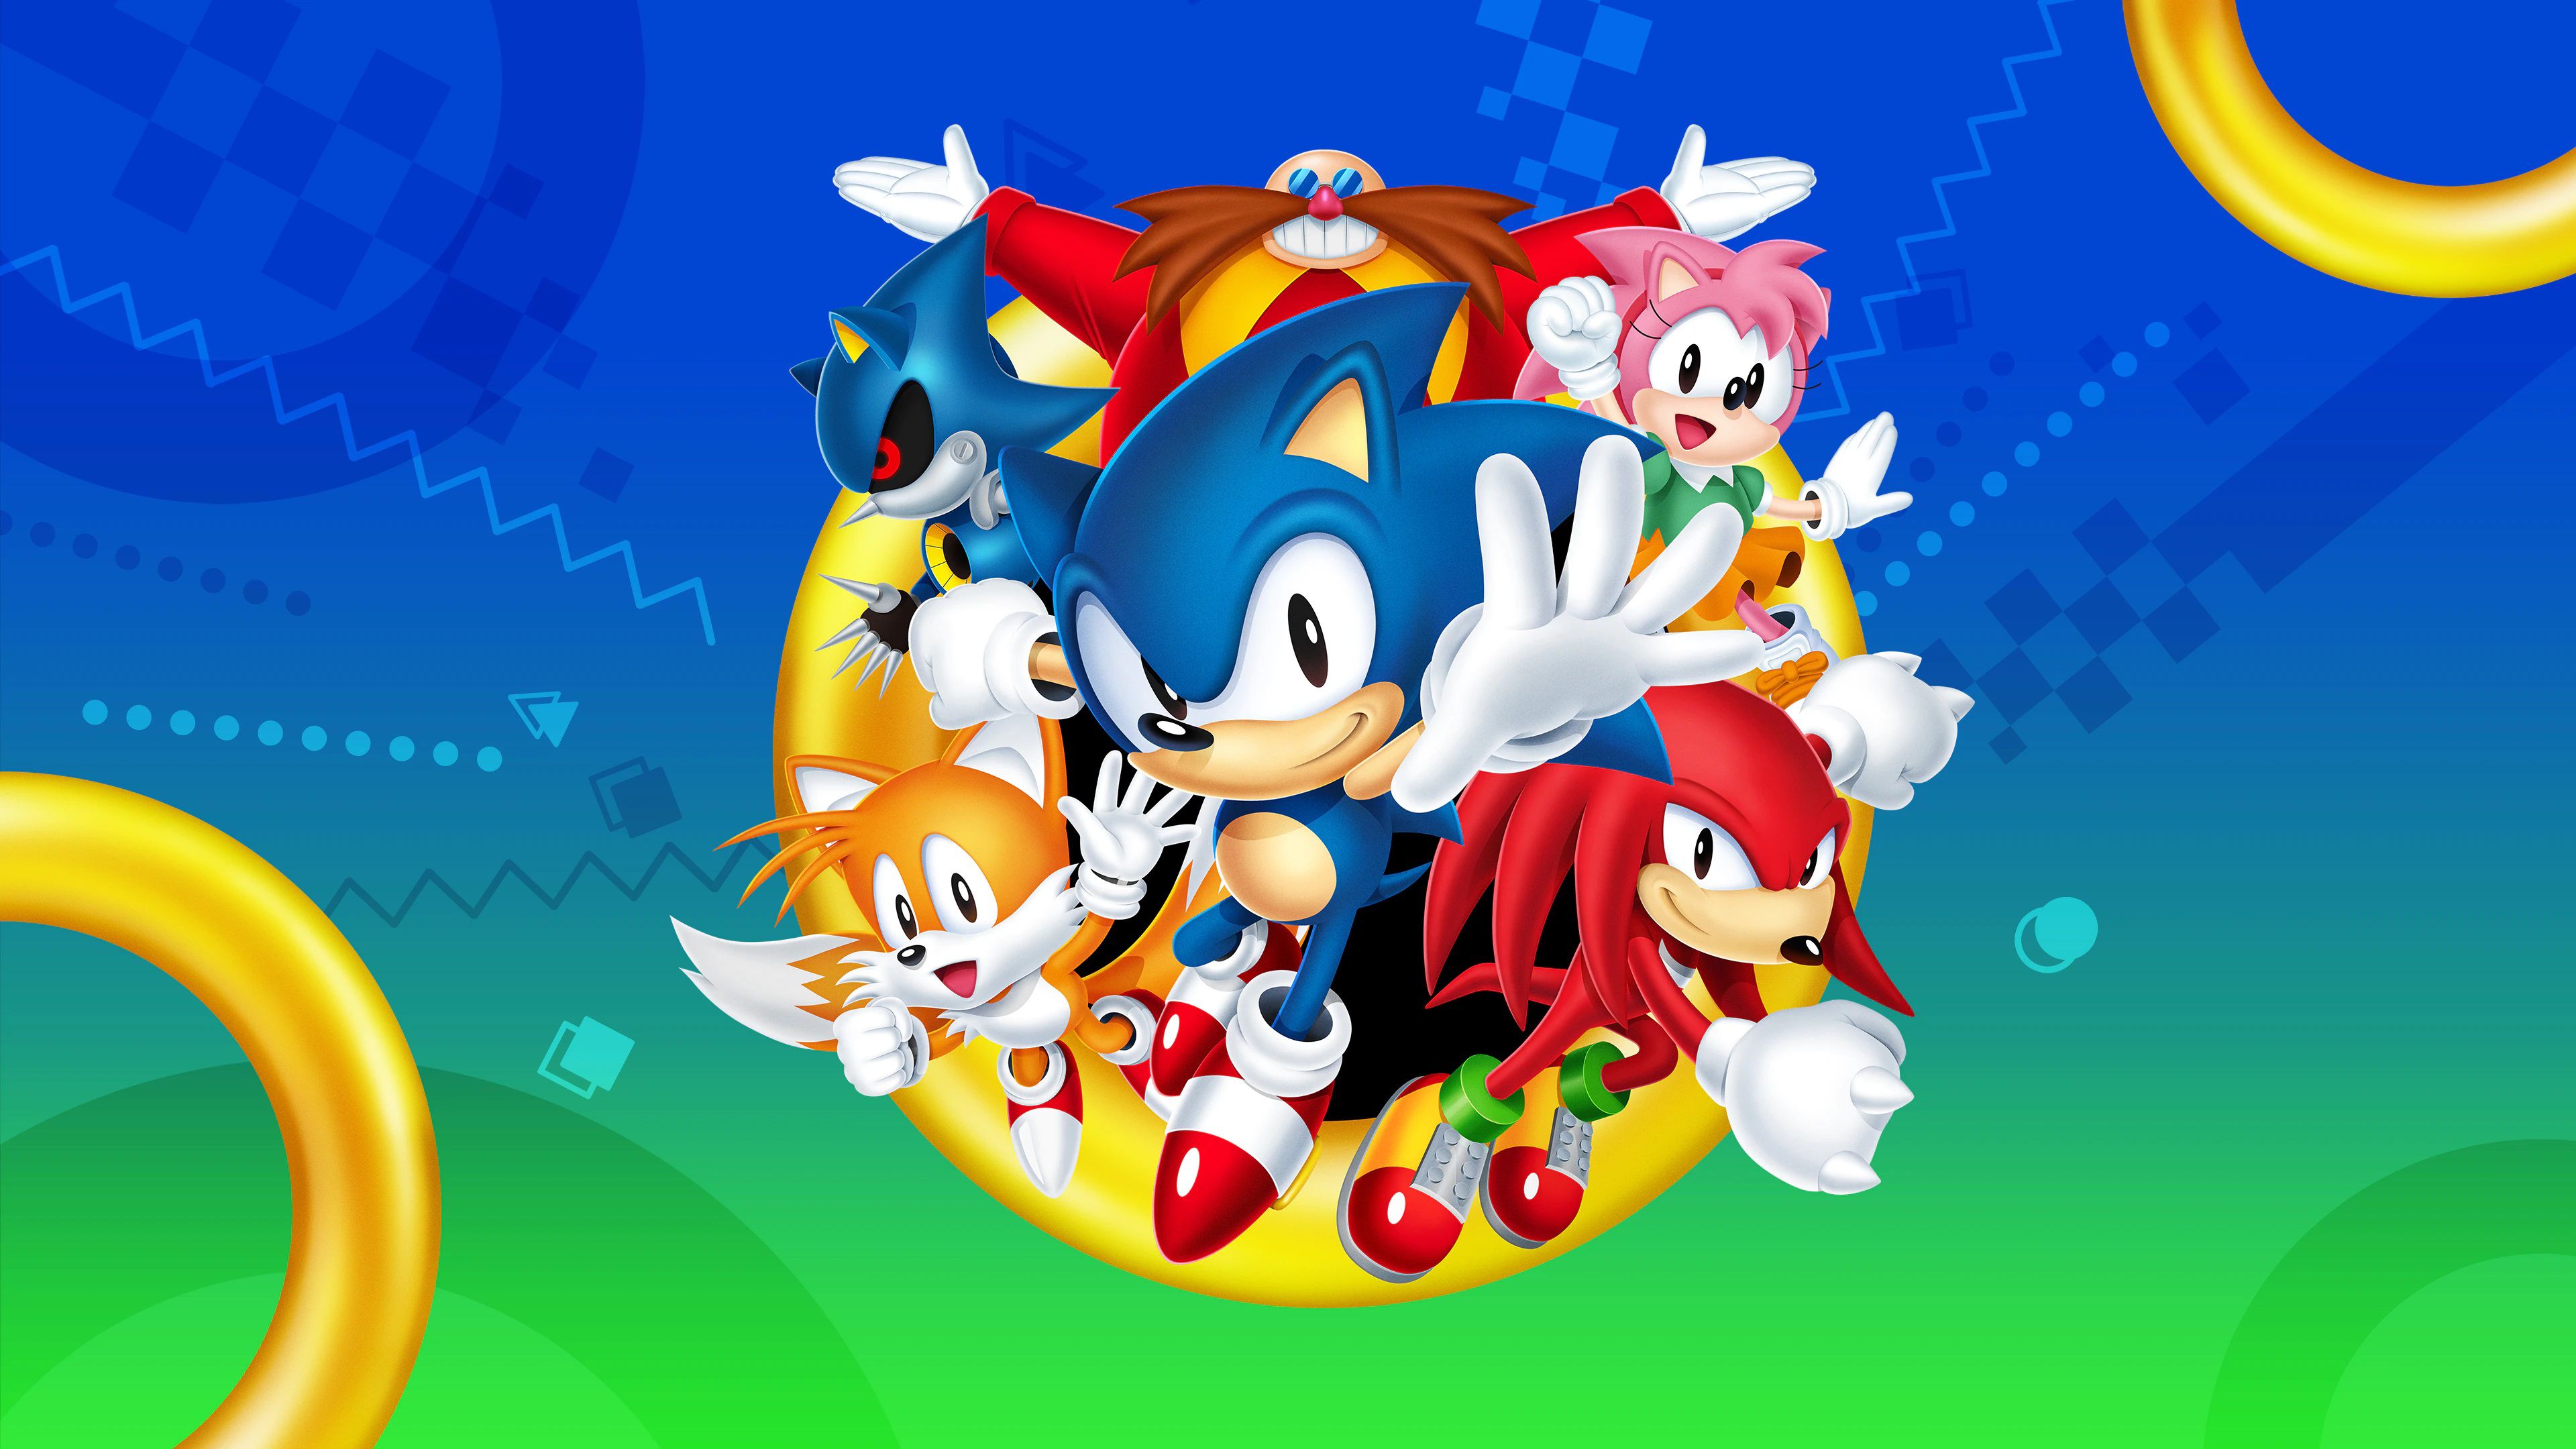 Jogo Sonic Mania Xbox 360